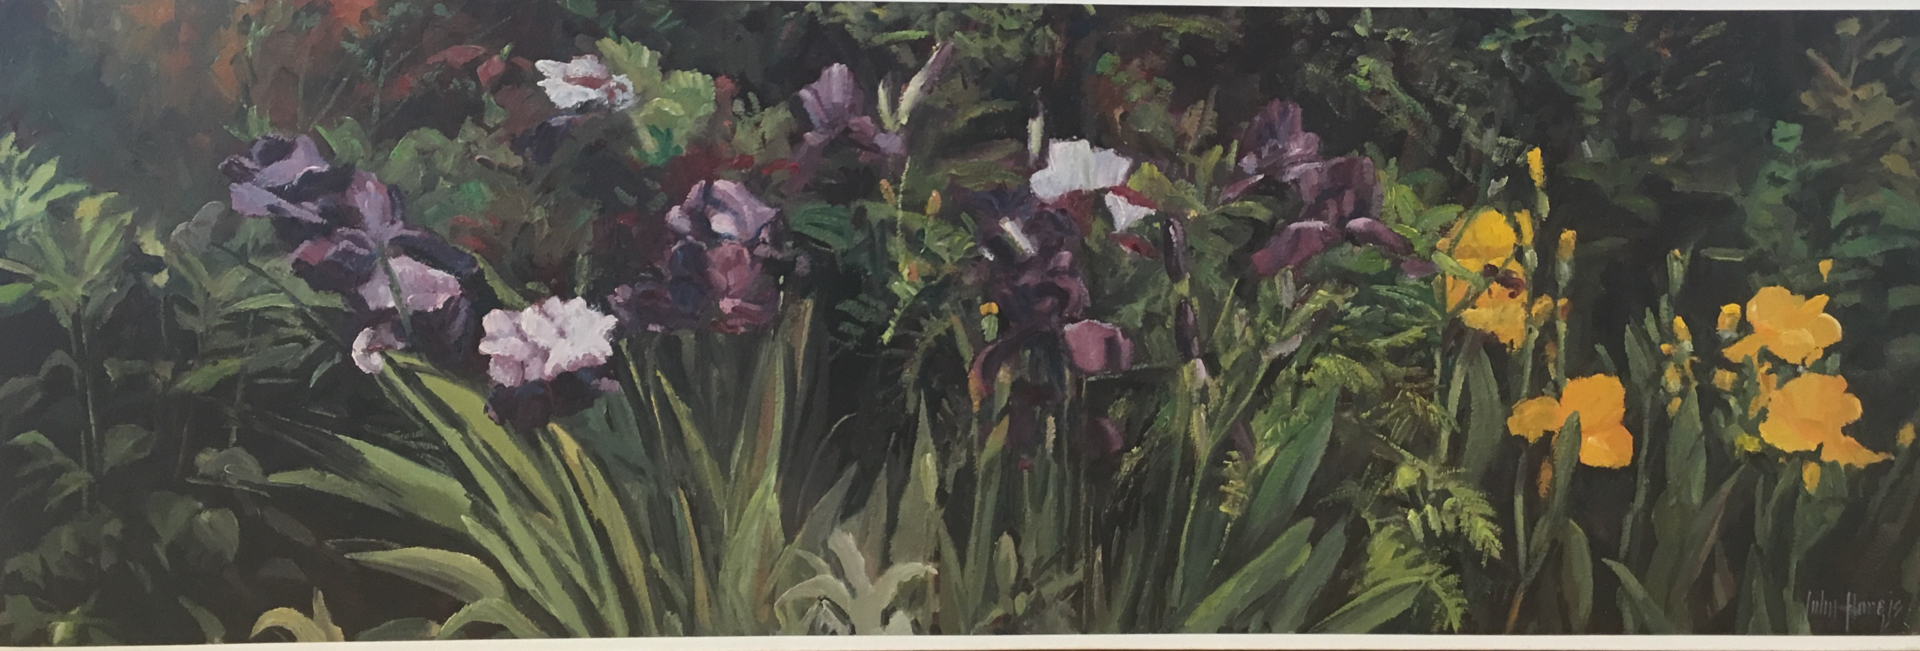 Iris Garden by John Horejs